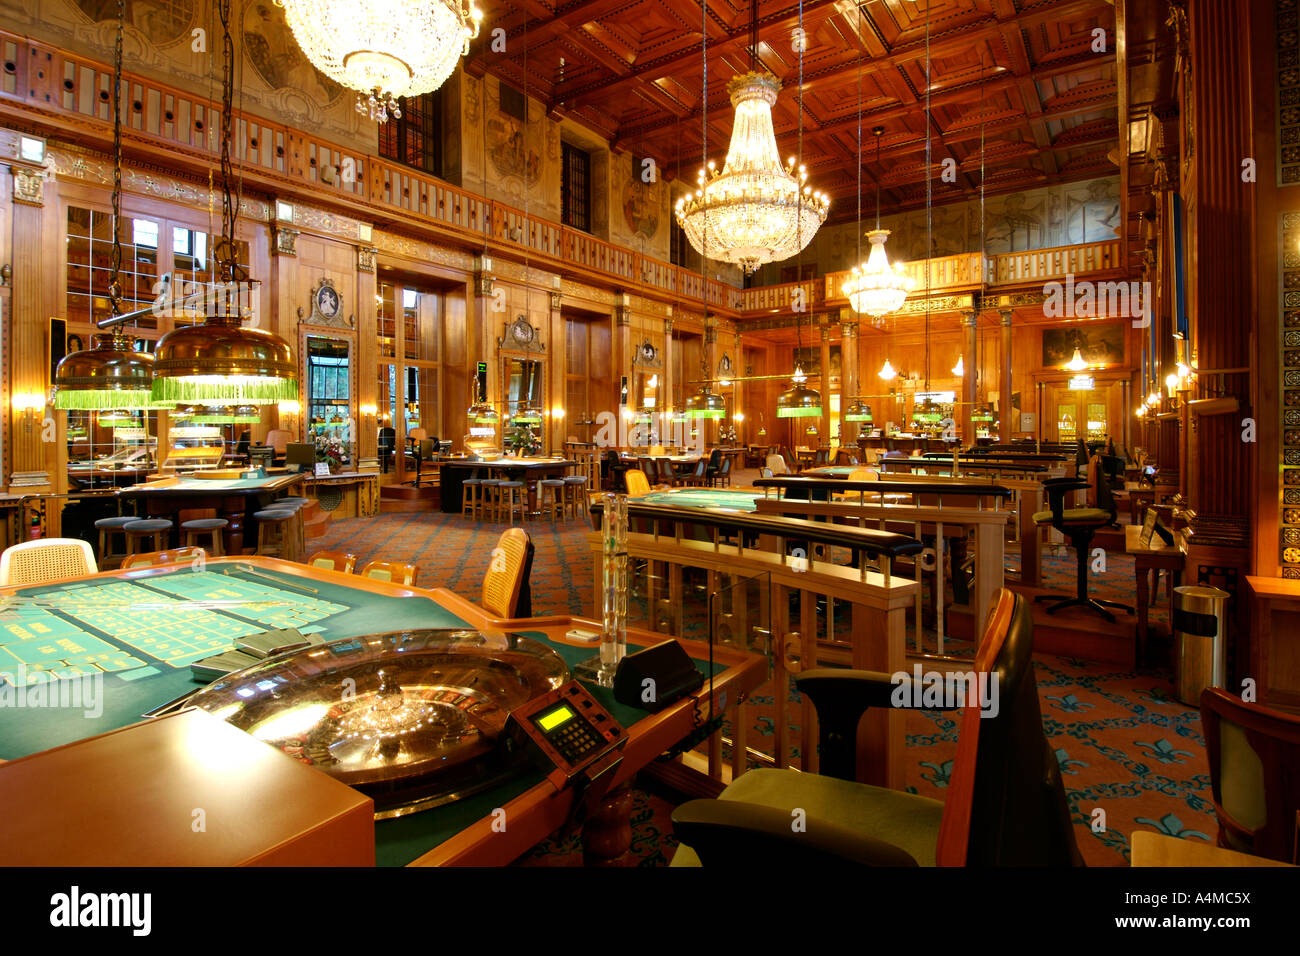 interior-of-the-kurhaus-casino-in-wiesbaden-near-frankfurt-in-germanys-A4MC5X.jpg